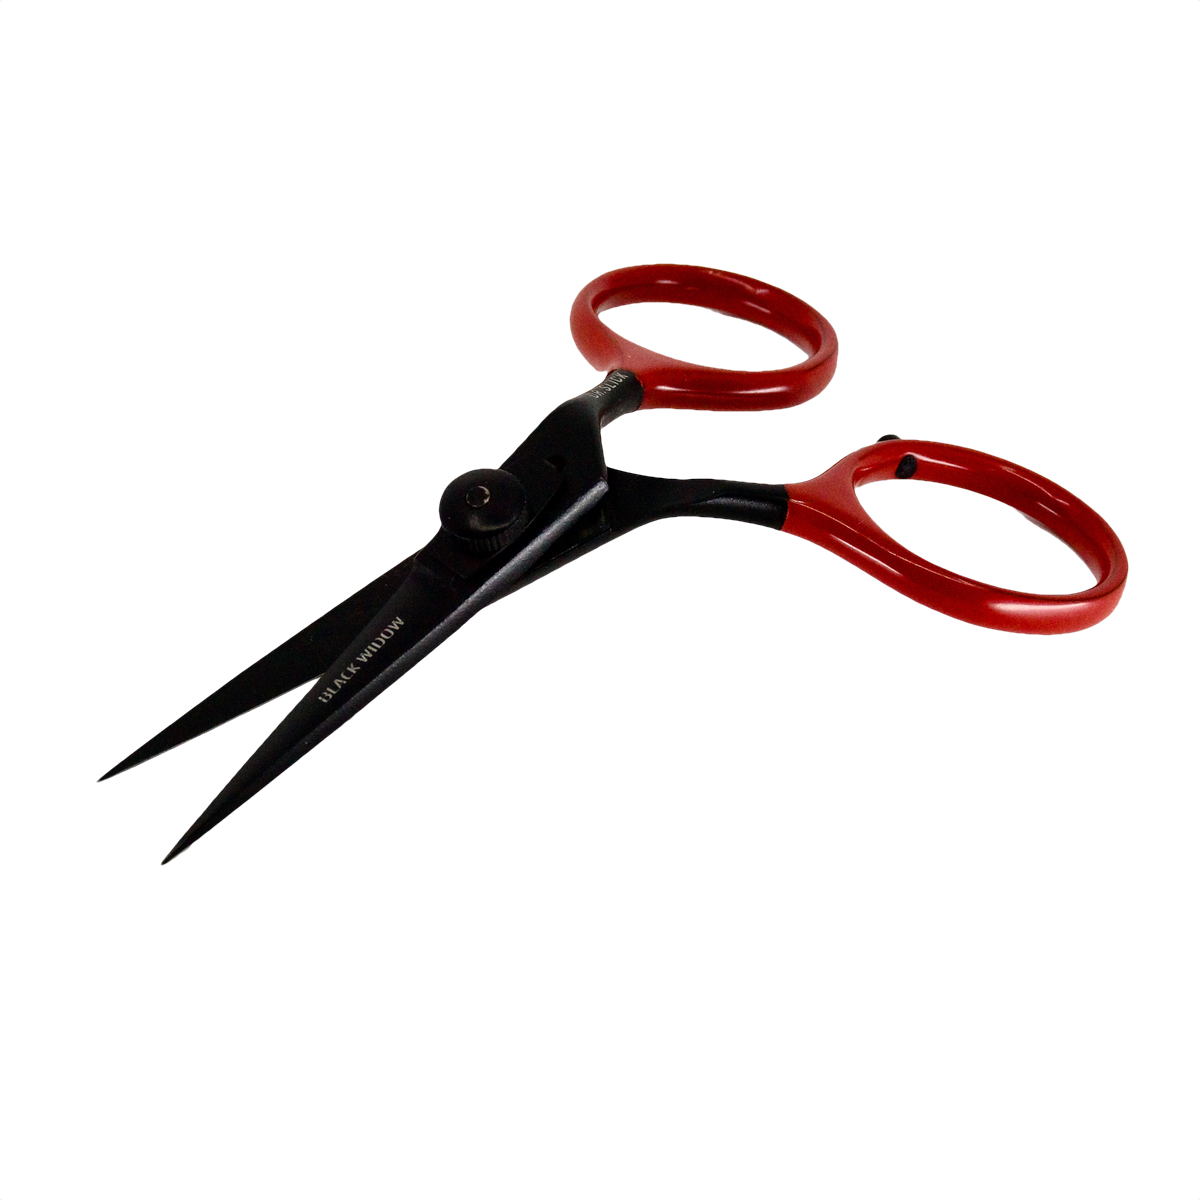 Dr. Slick Black Widow Razor Scissors- 4 All-Purpose